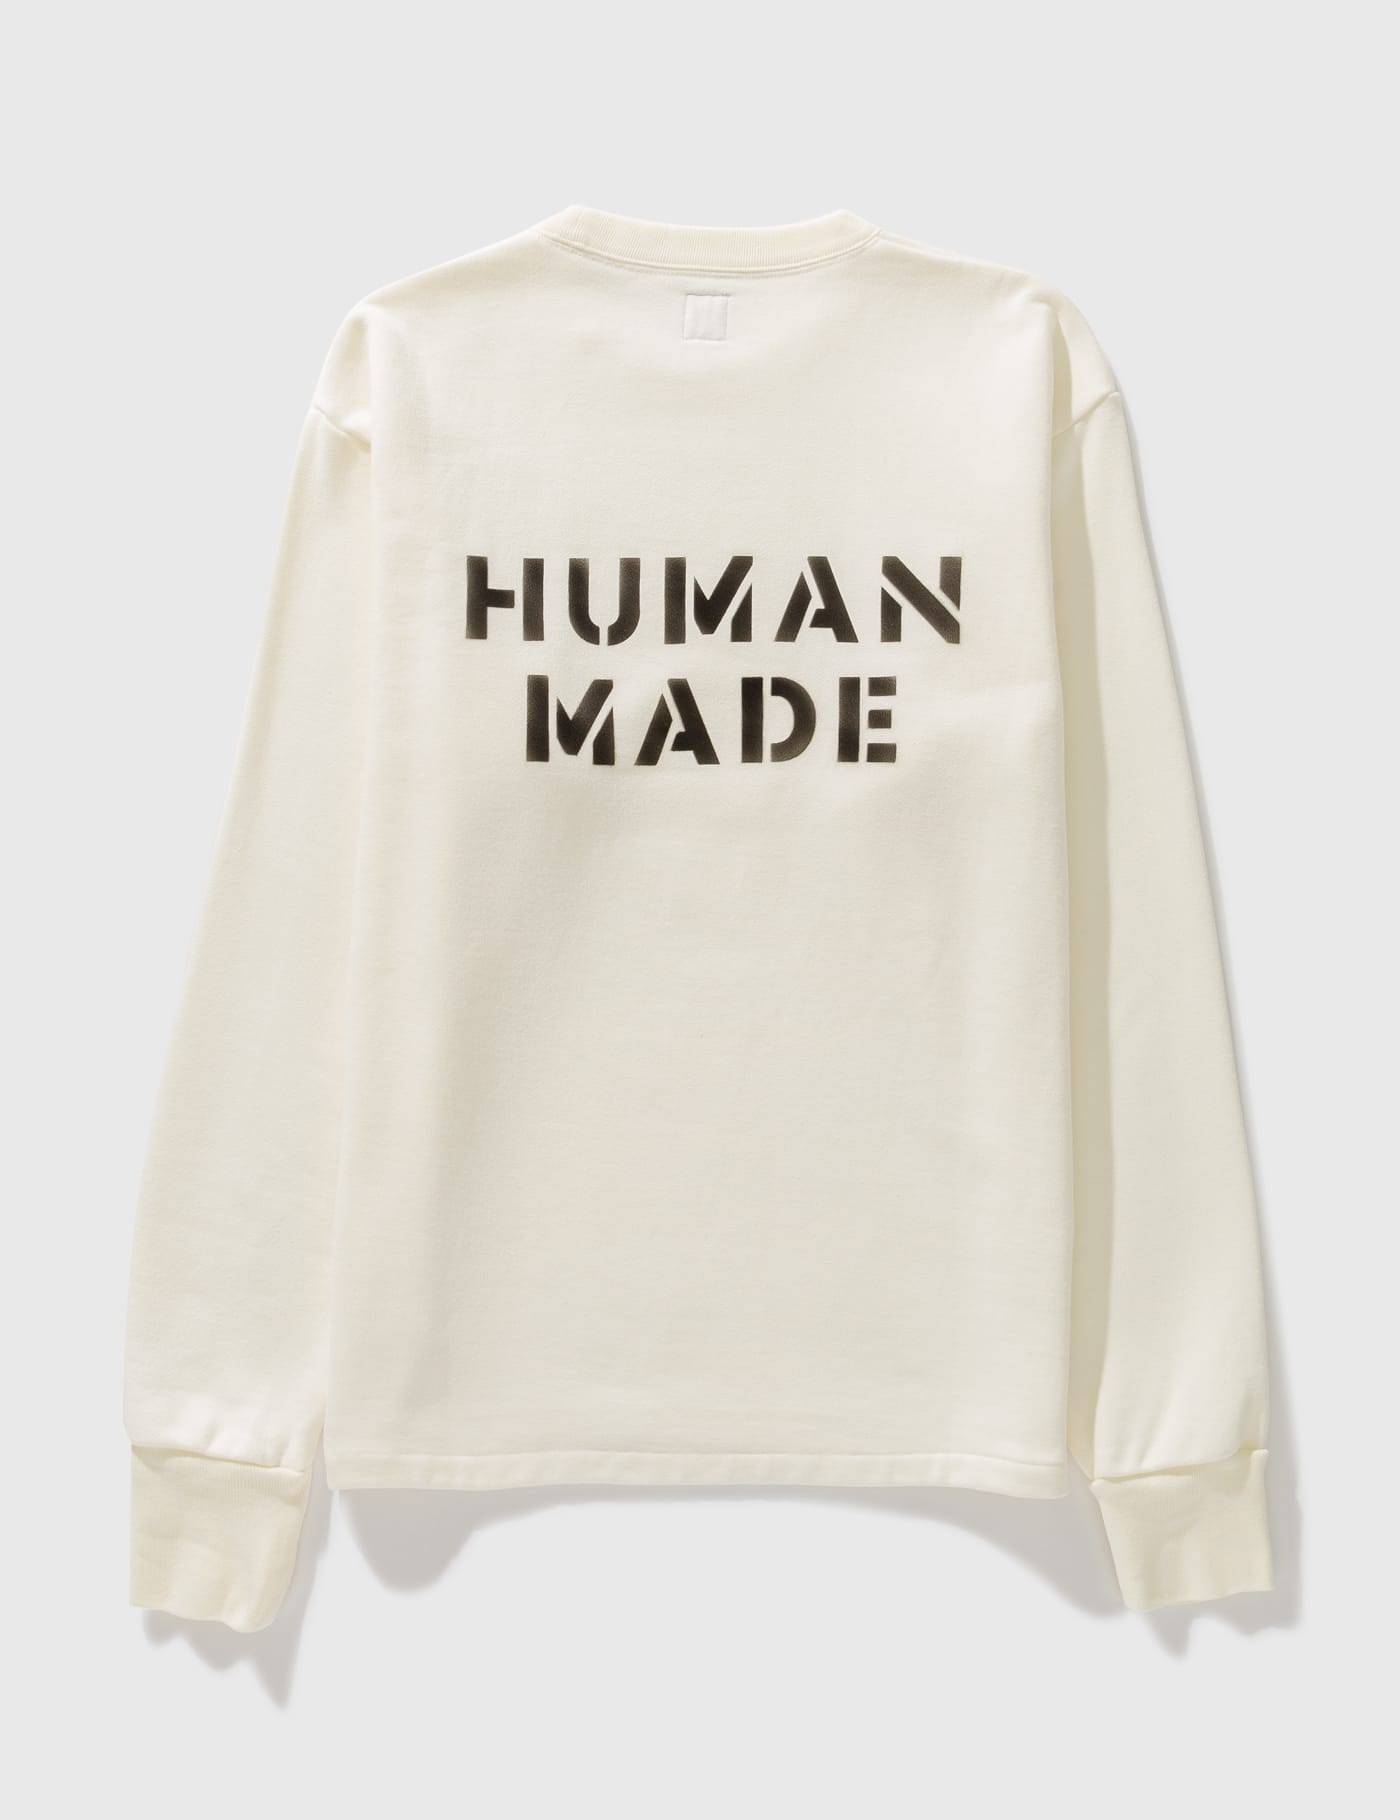 Human Made - Human Made Military Sweatshirt | HBX - Globally